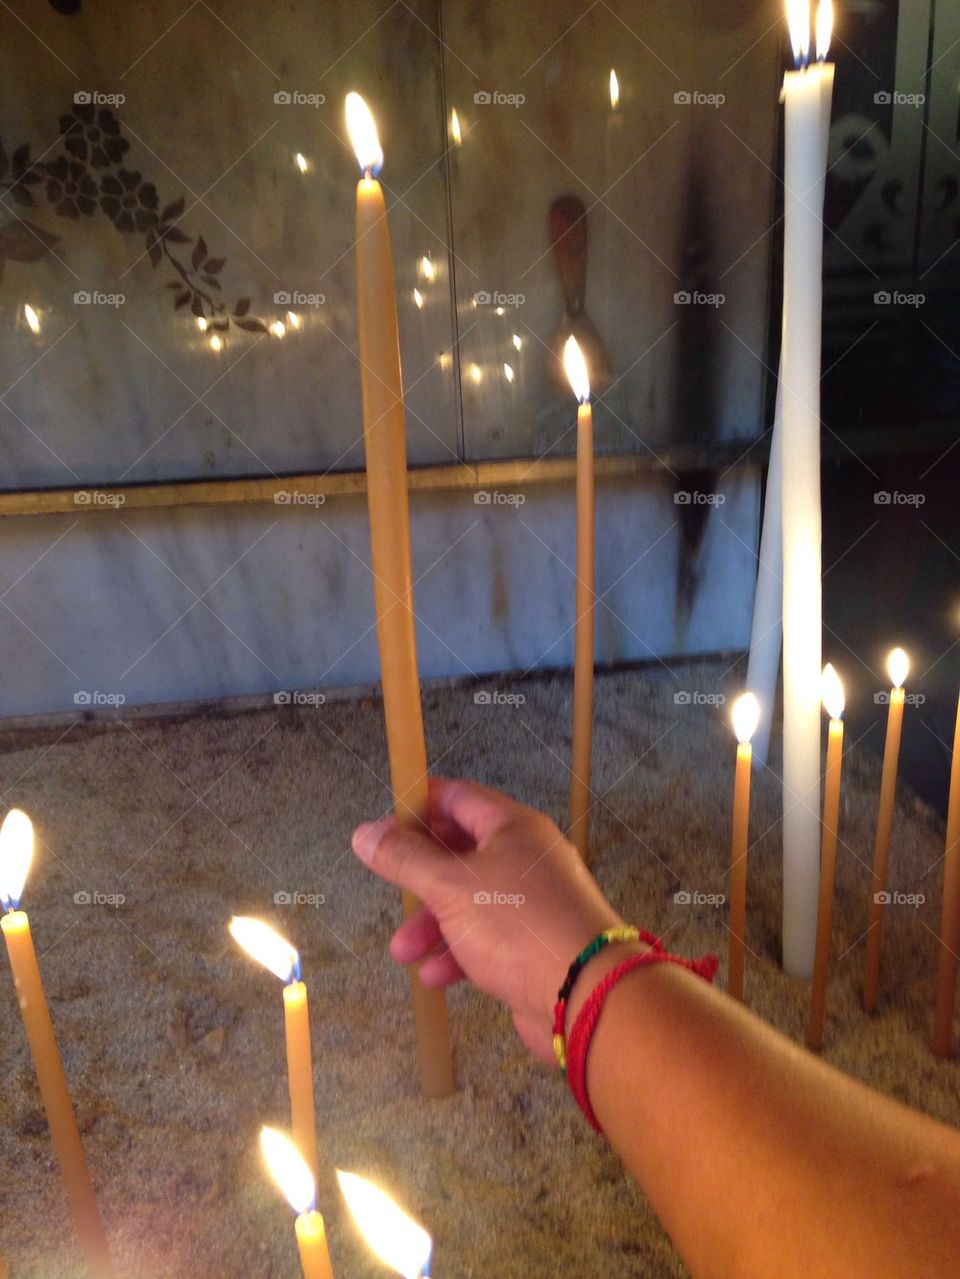 Prayer candle